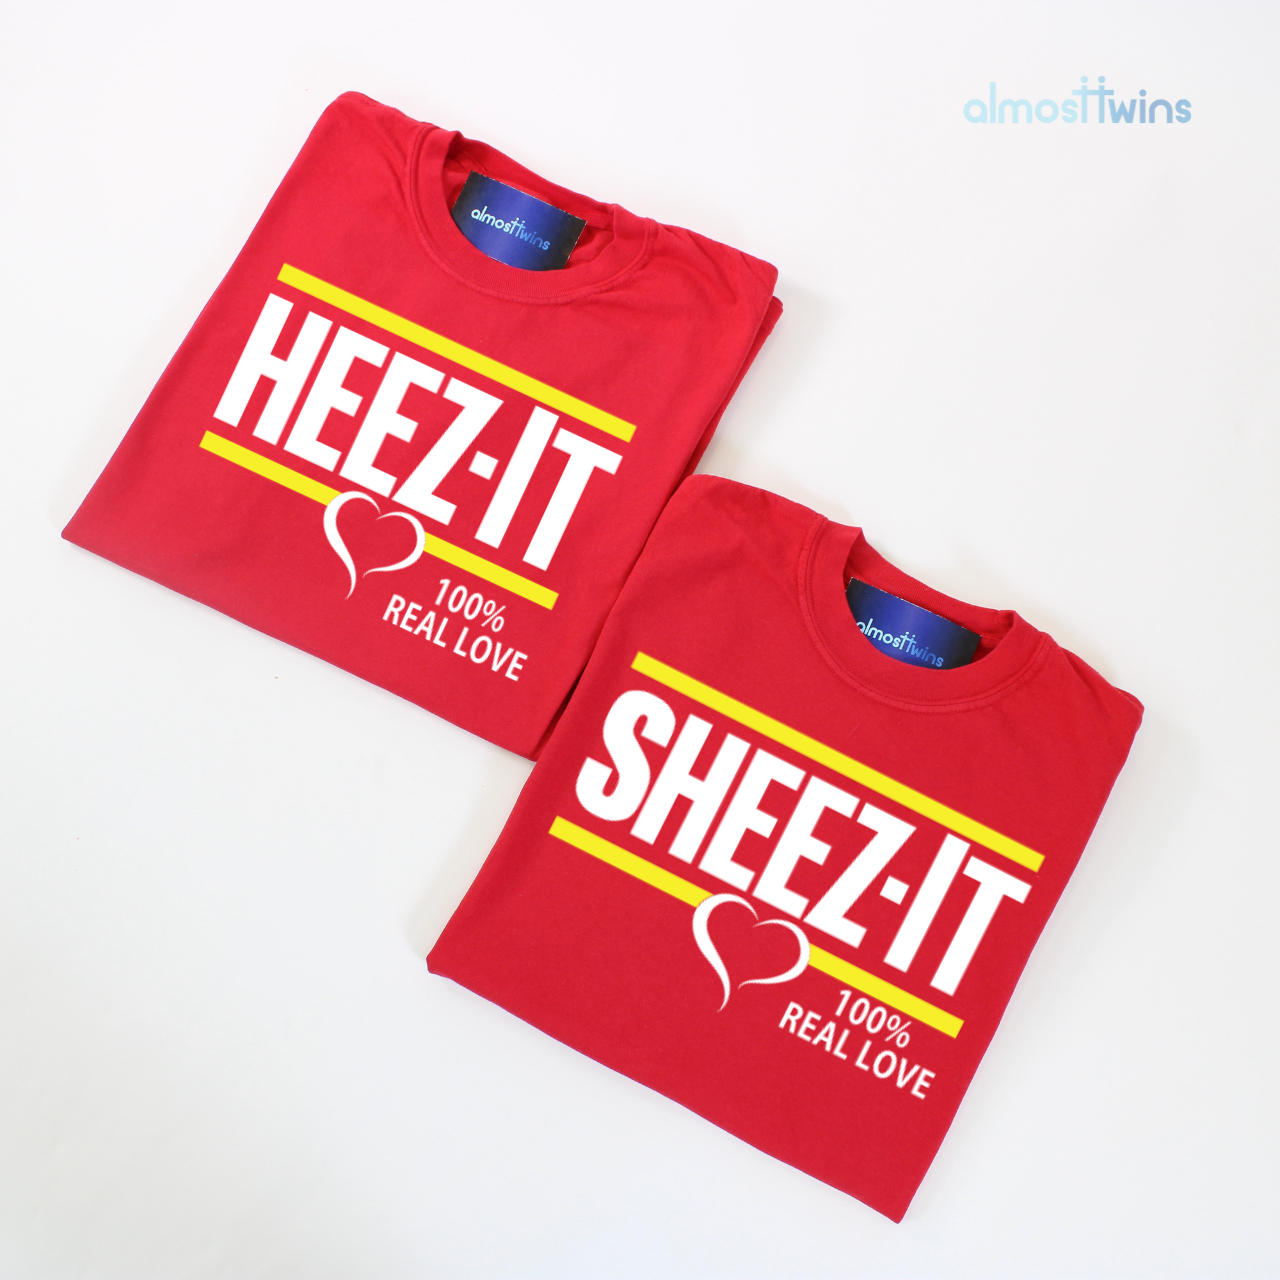 Funny Heez-it Sheez-it Tshirt